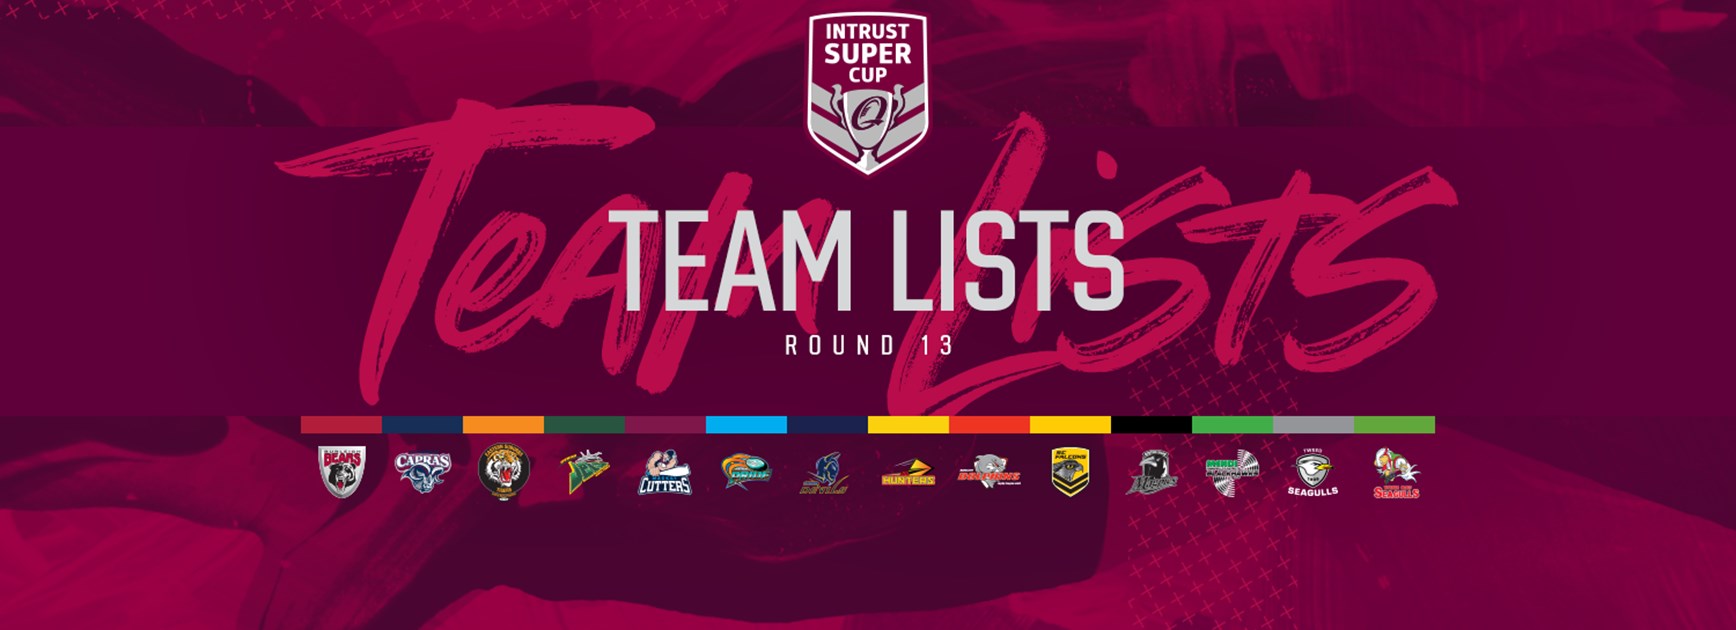 Intrust Super Cup Round 13 team lists